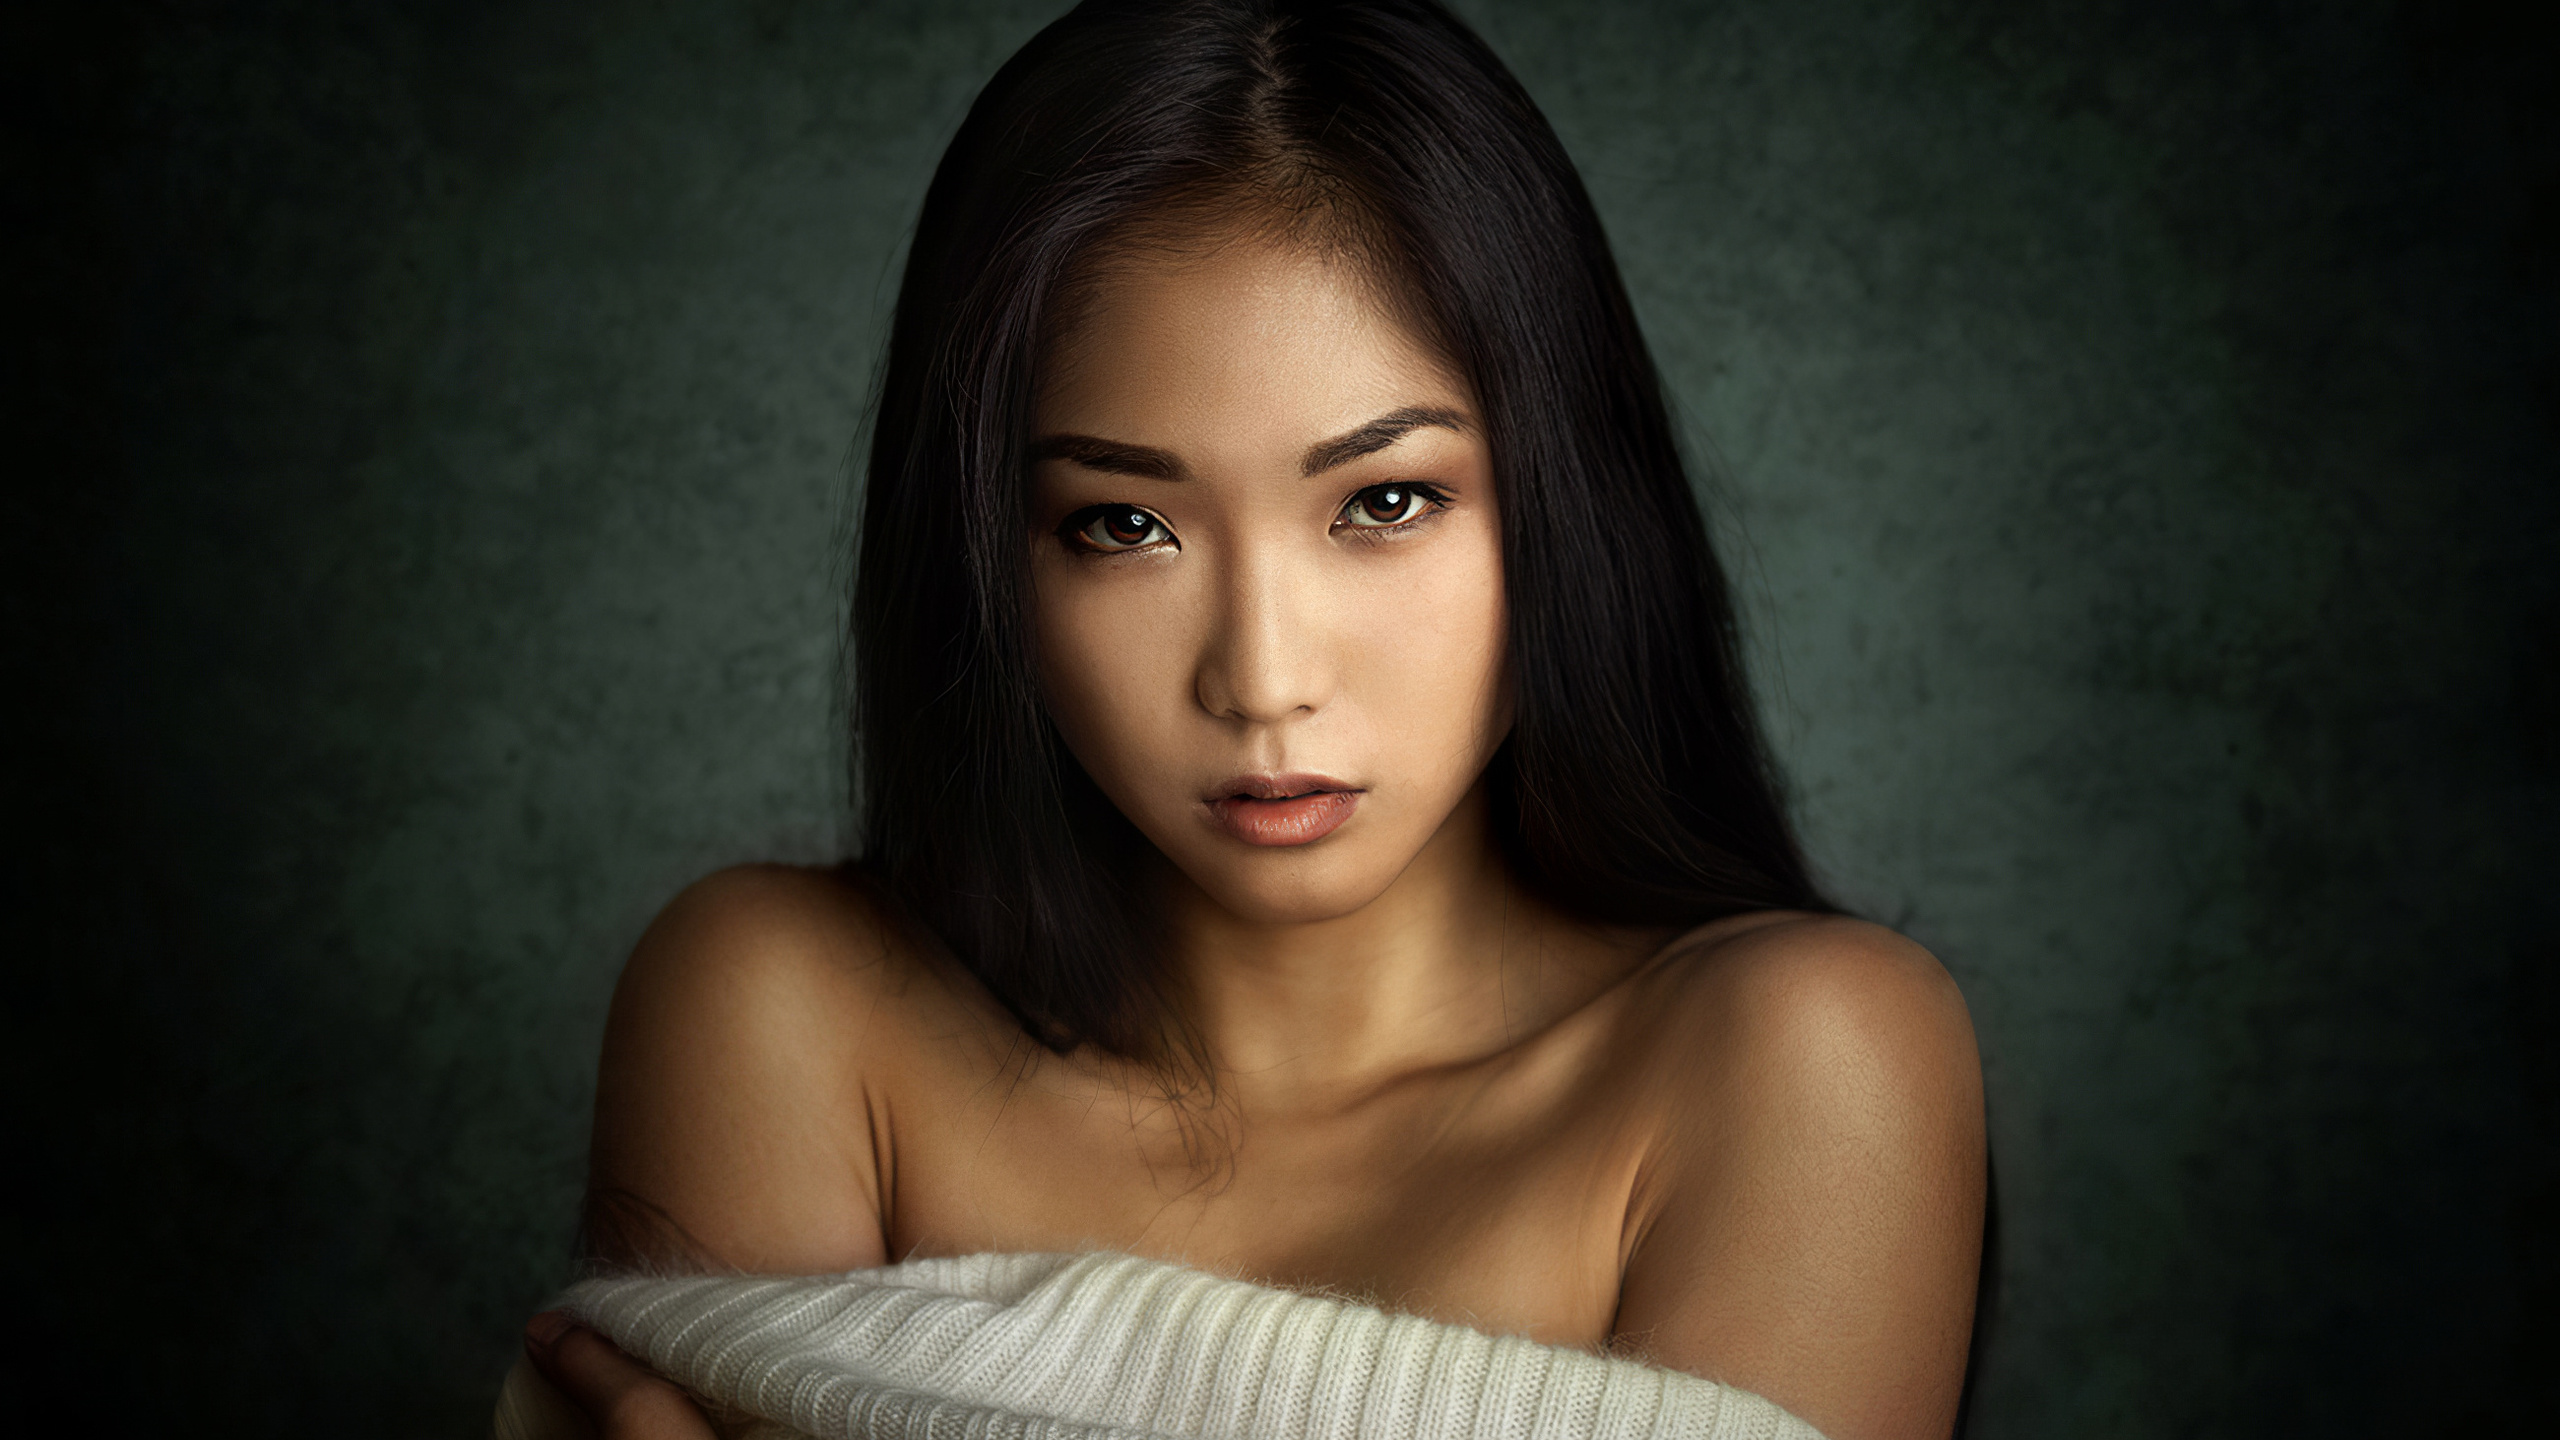 asian, girl, women, eyes, sexy, long hair, sweater, woman, wall, model, photography